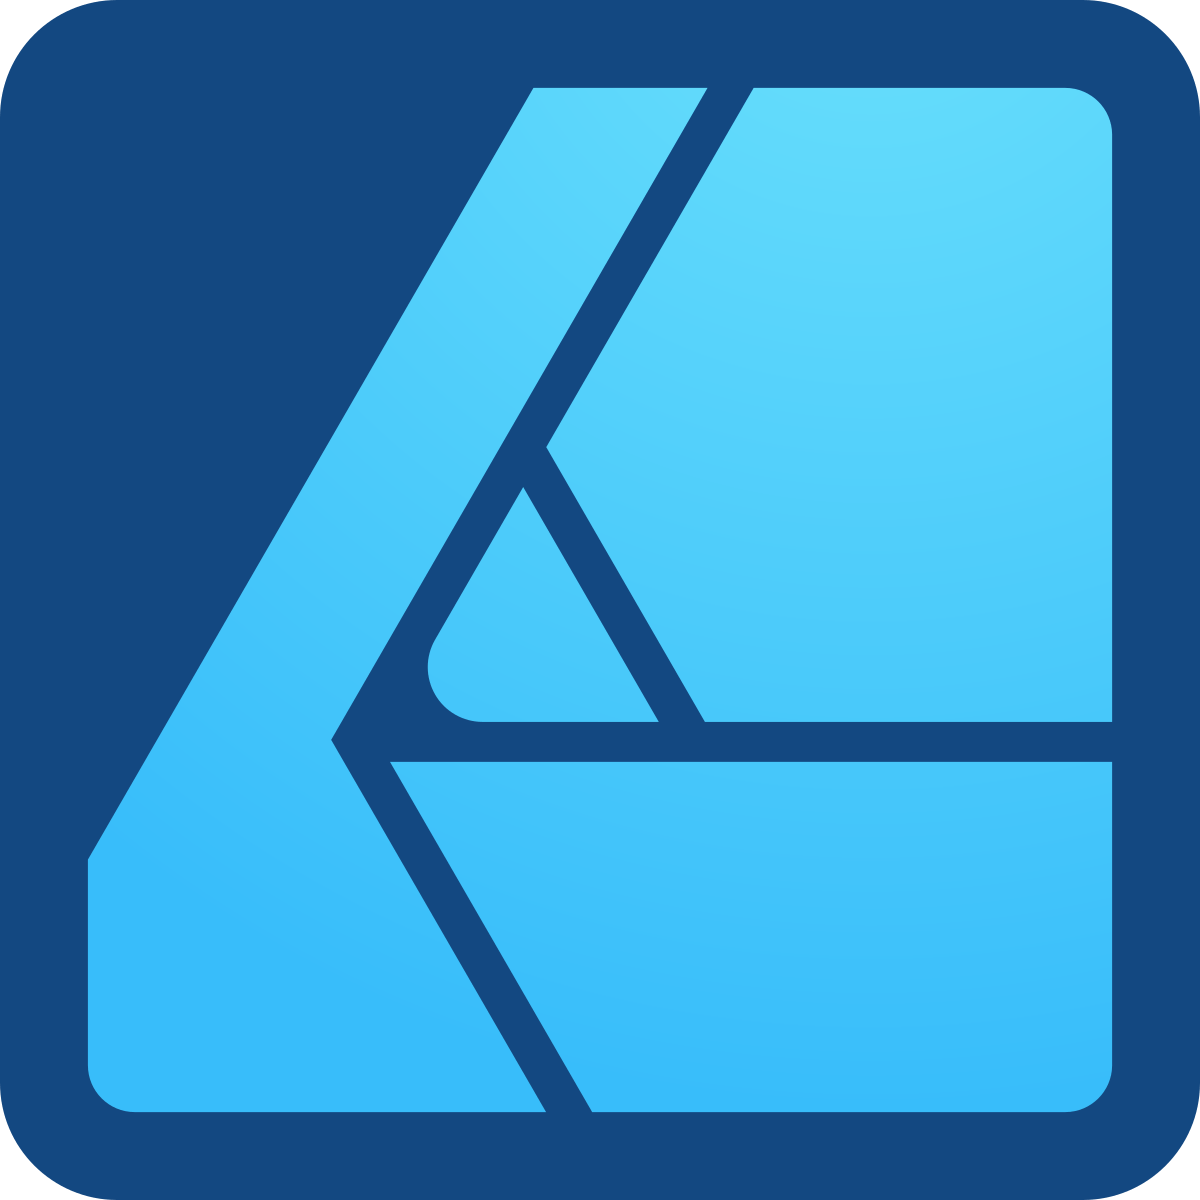 Affinity Designer logo.